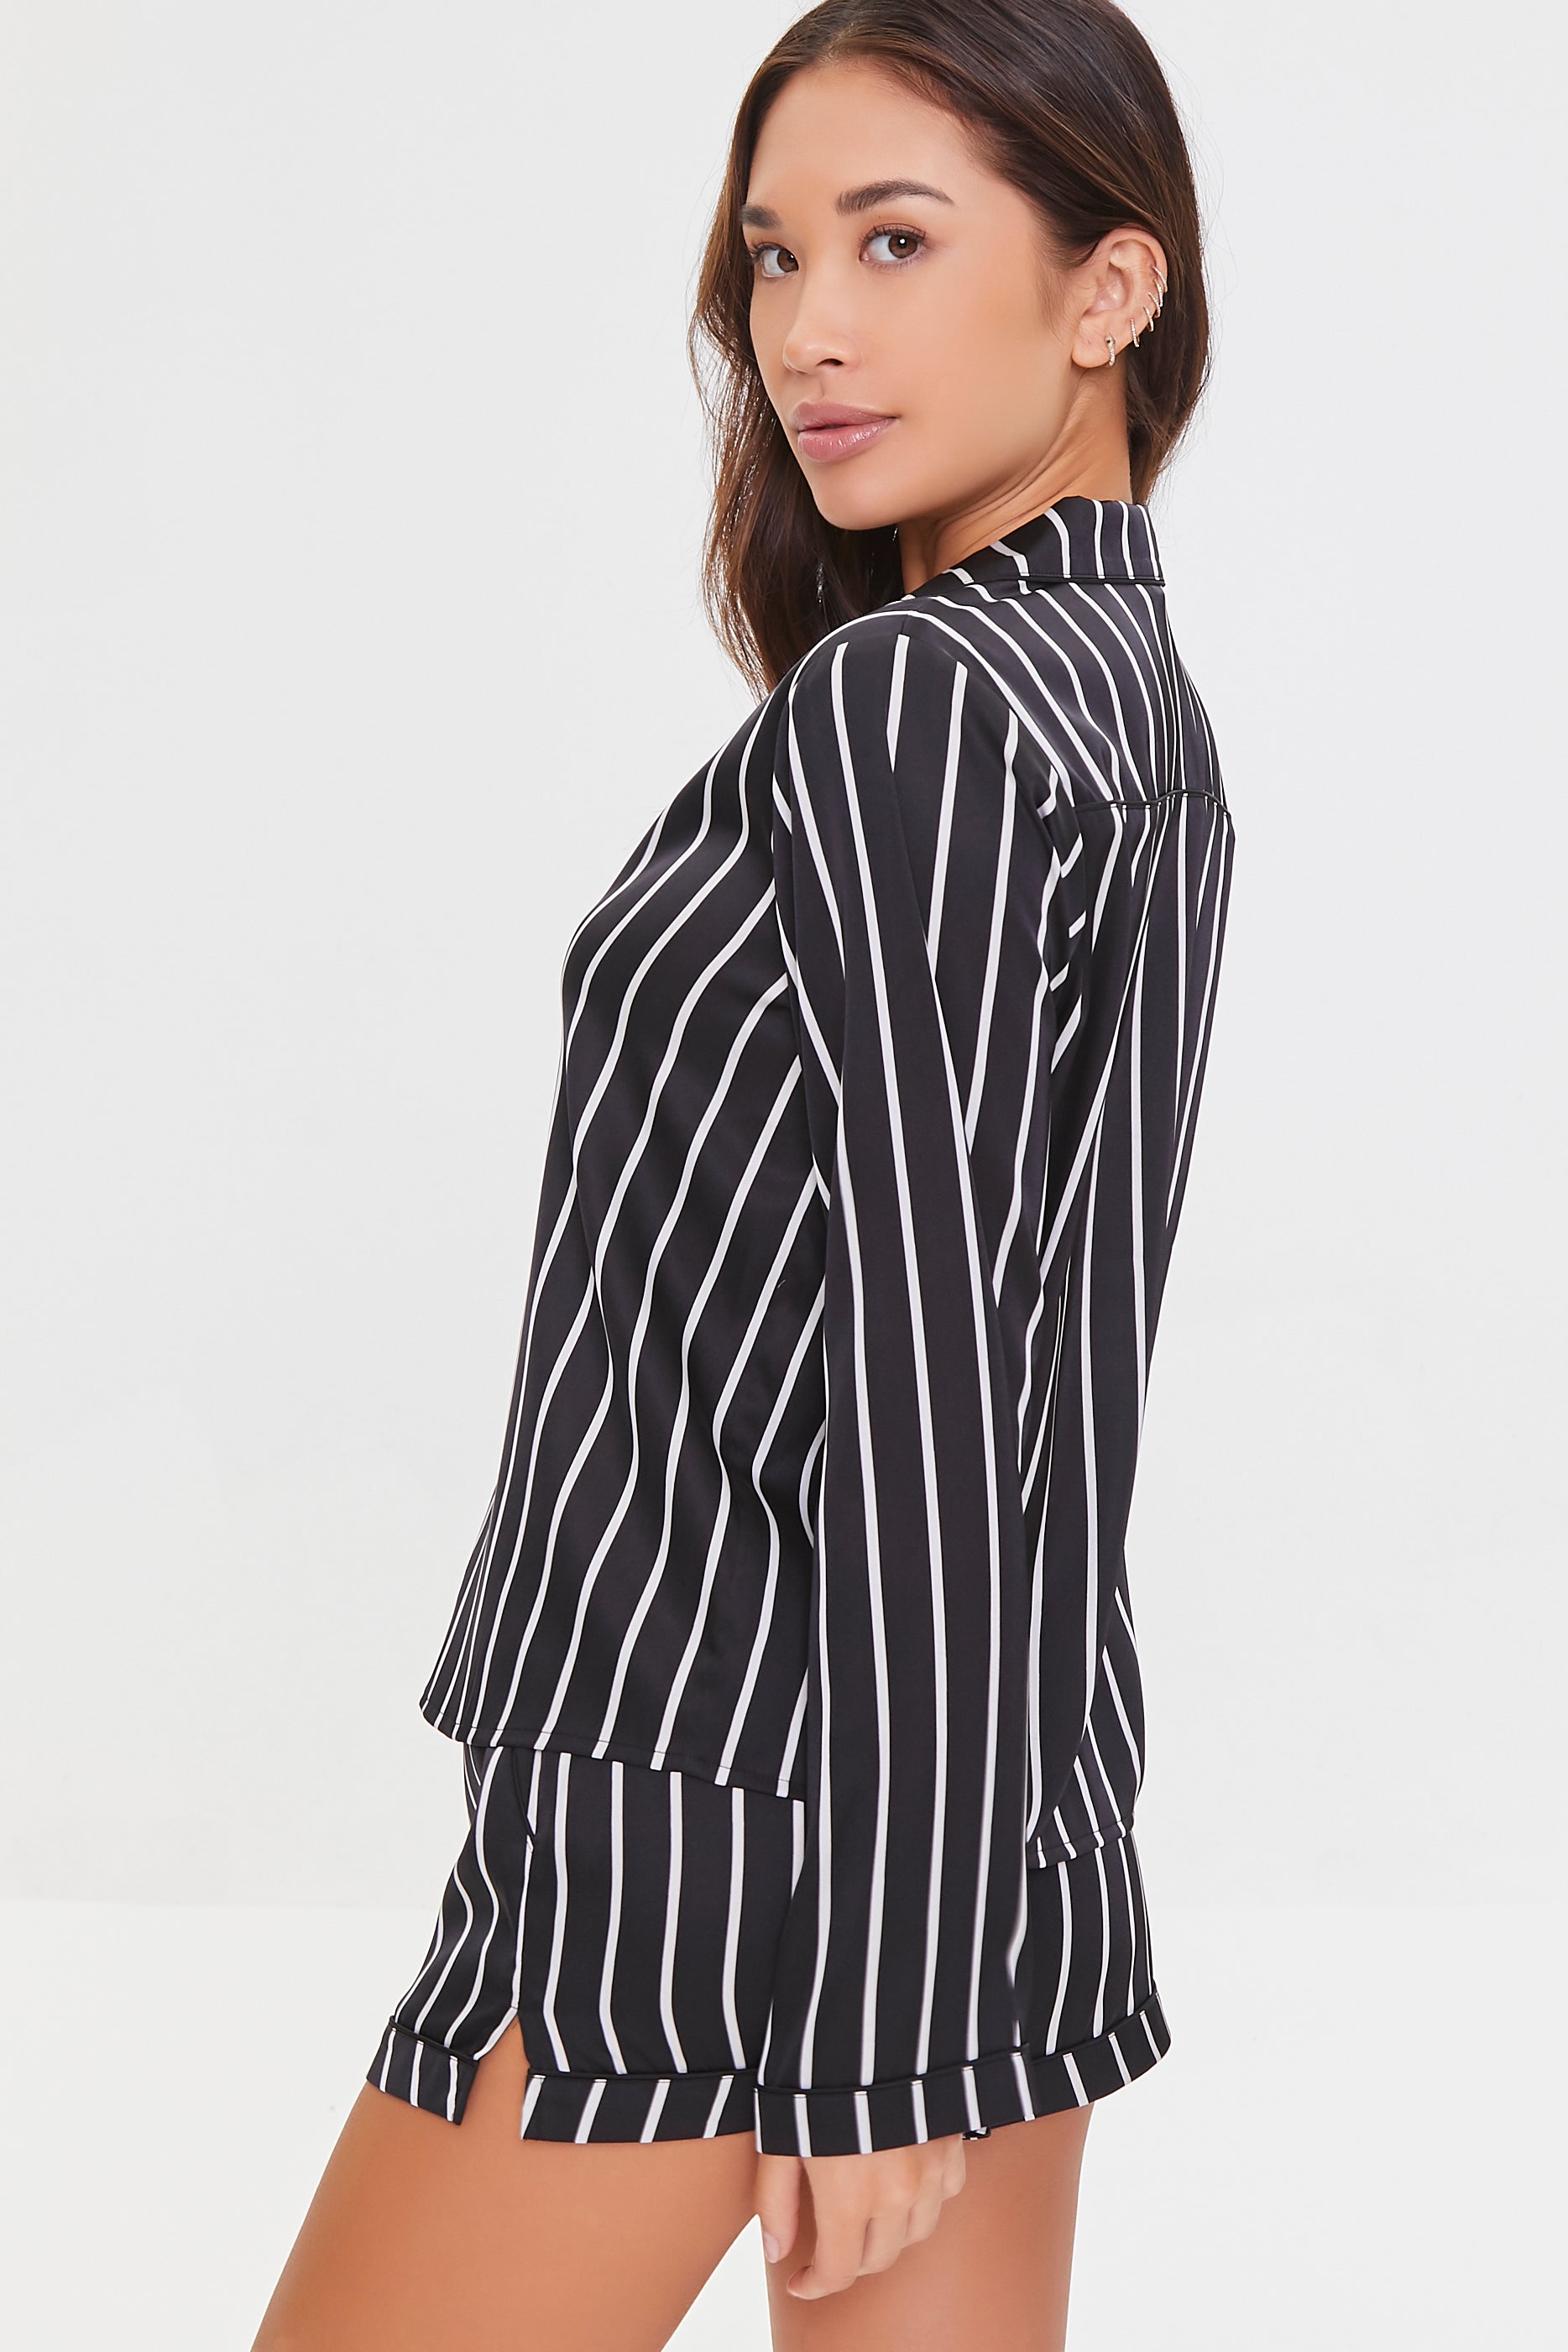 Blackcream Striped Shirt & Shorts Pajama Set 2